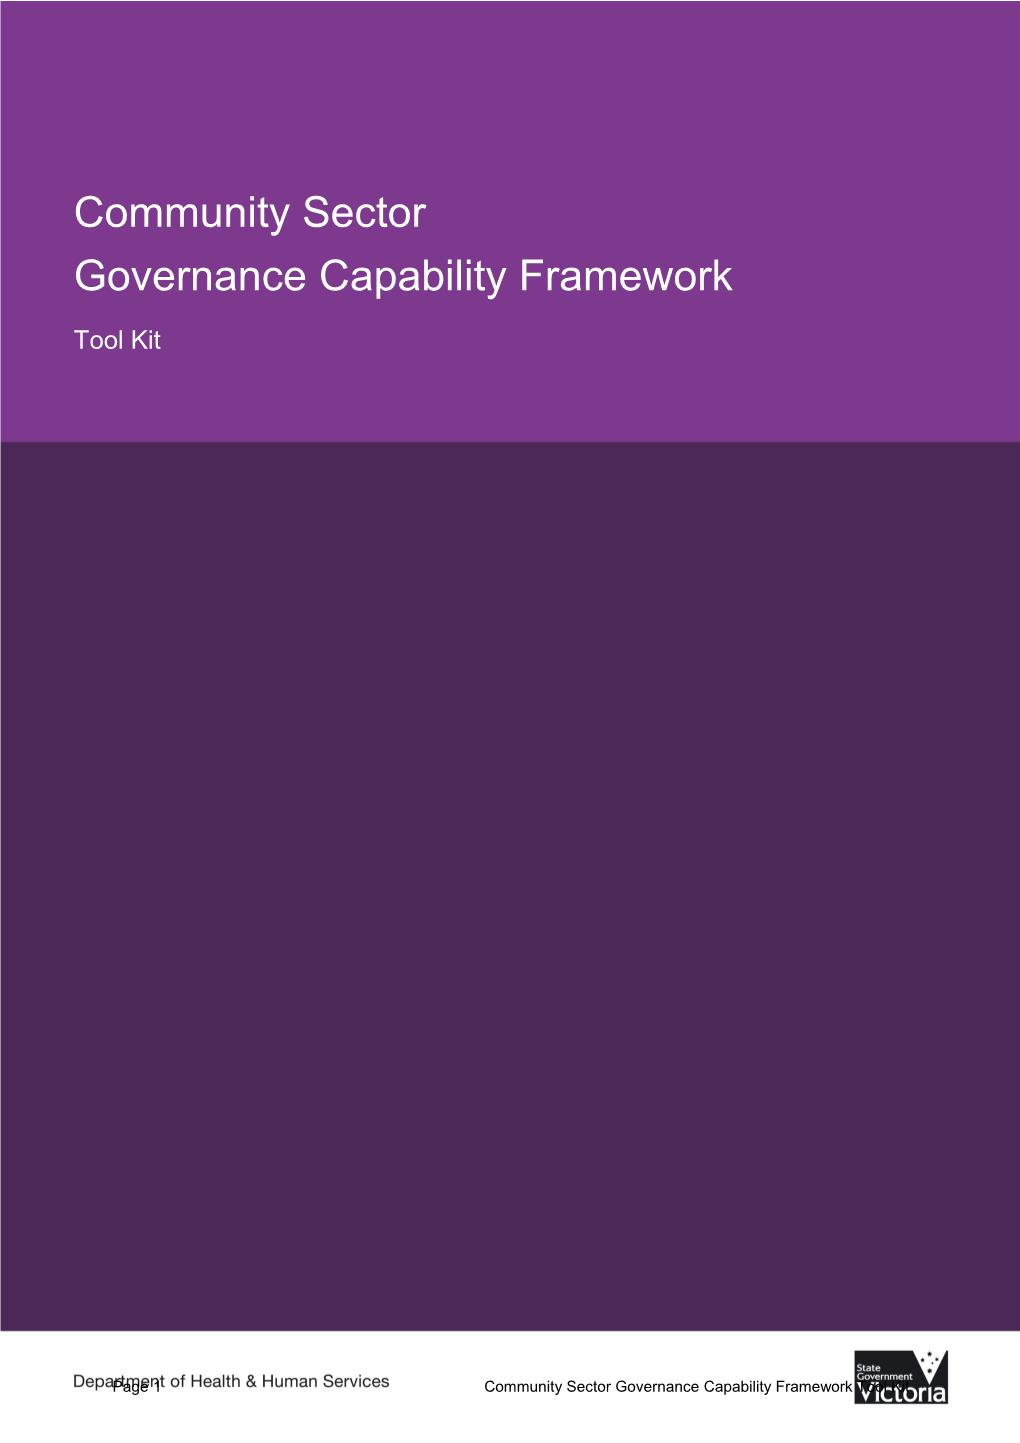 The Community Sector Governance Capability Framework Toolkit